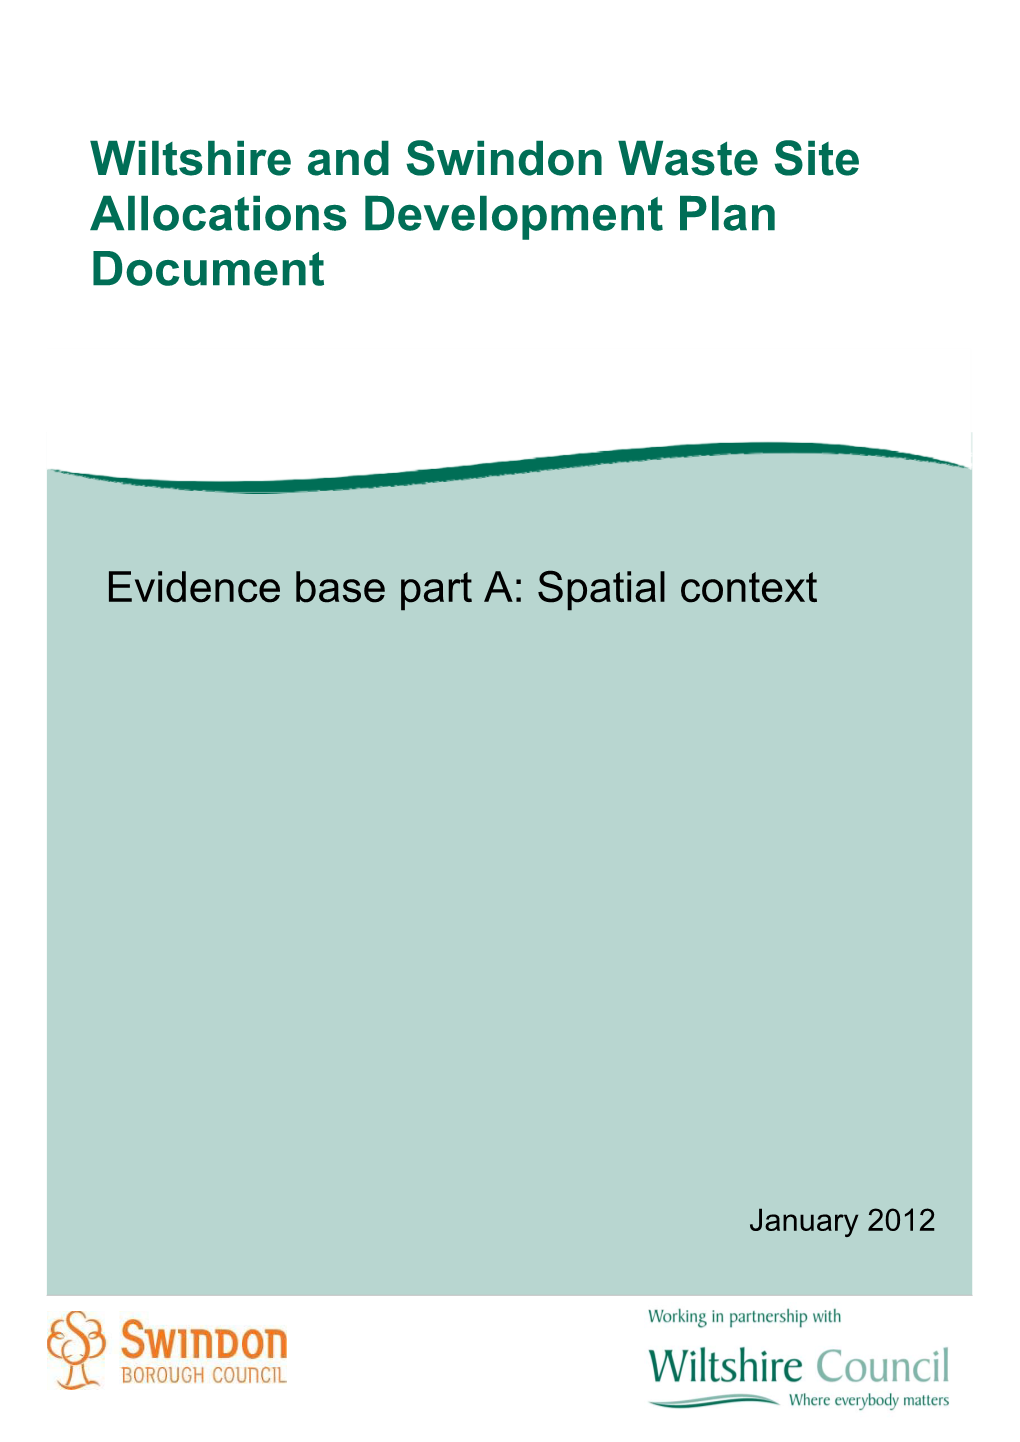 Evidence Base Part A: Spatial Context